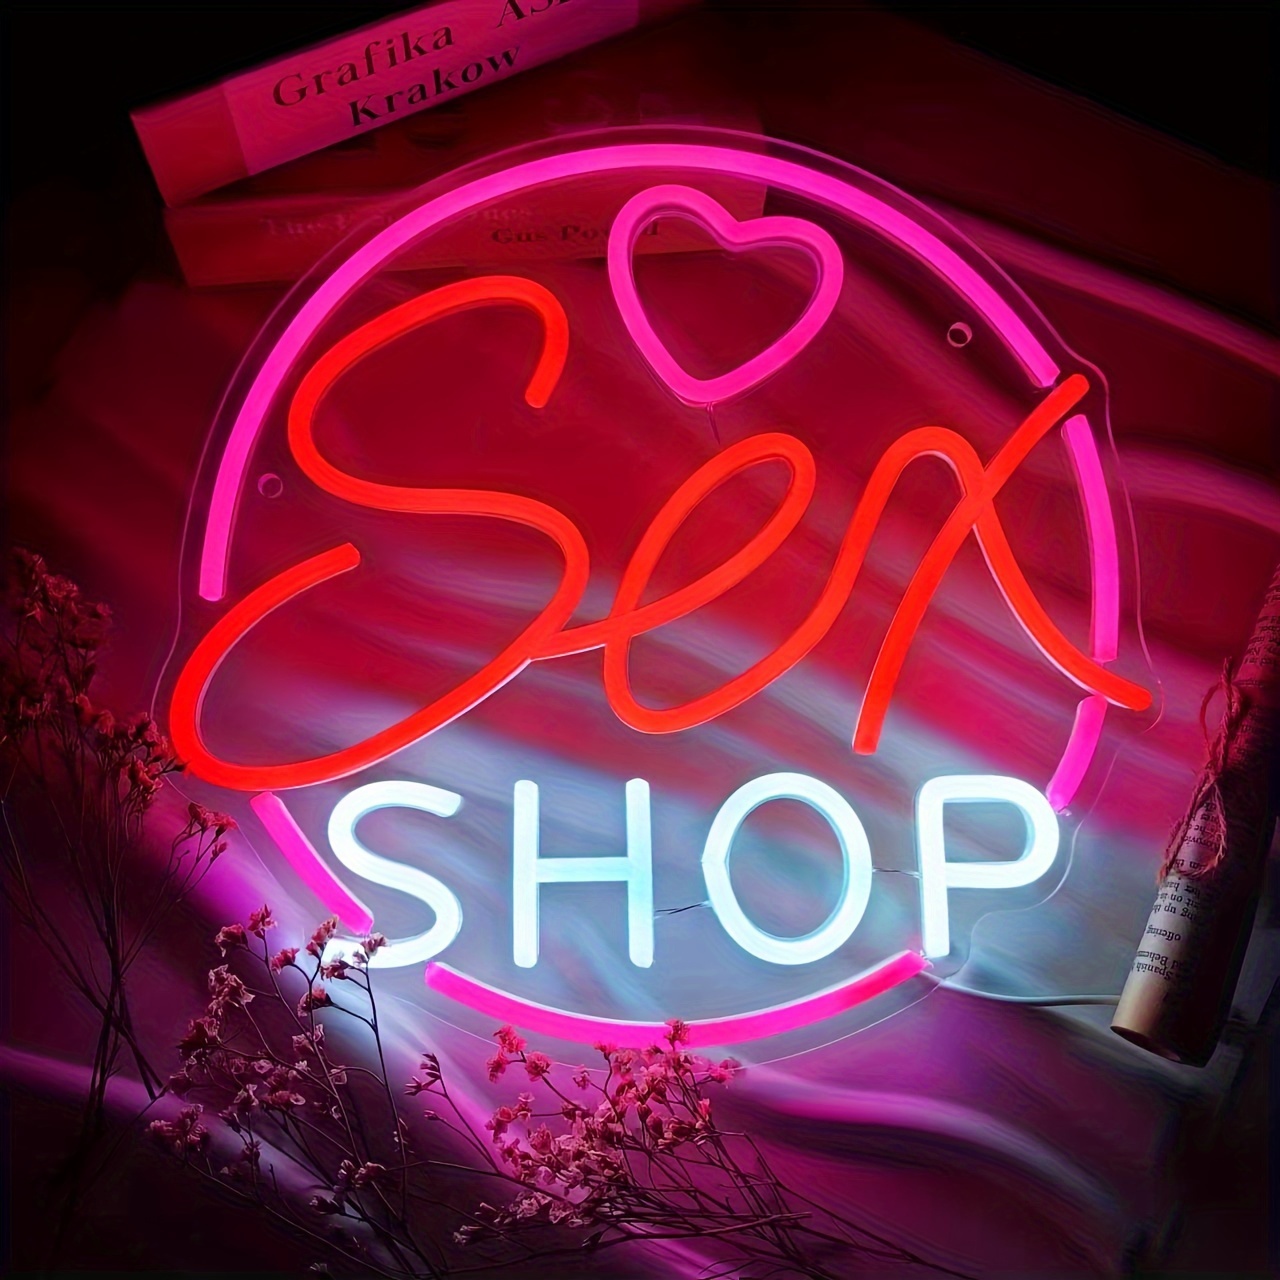 Секс-шоп — Википедия